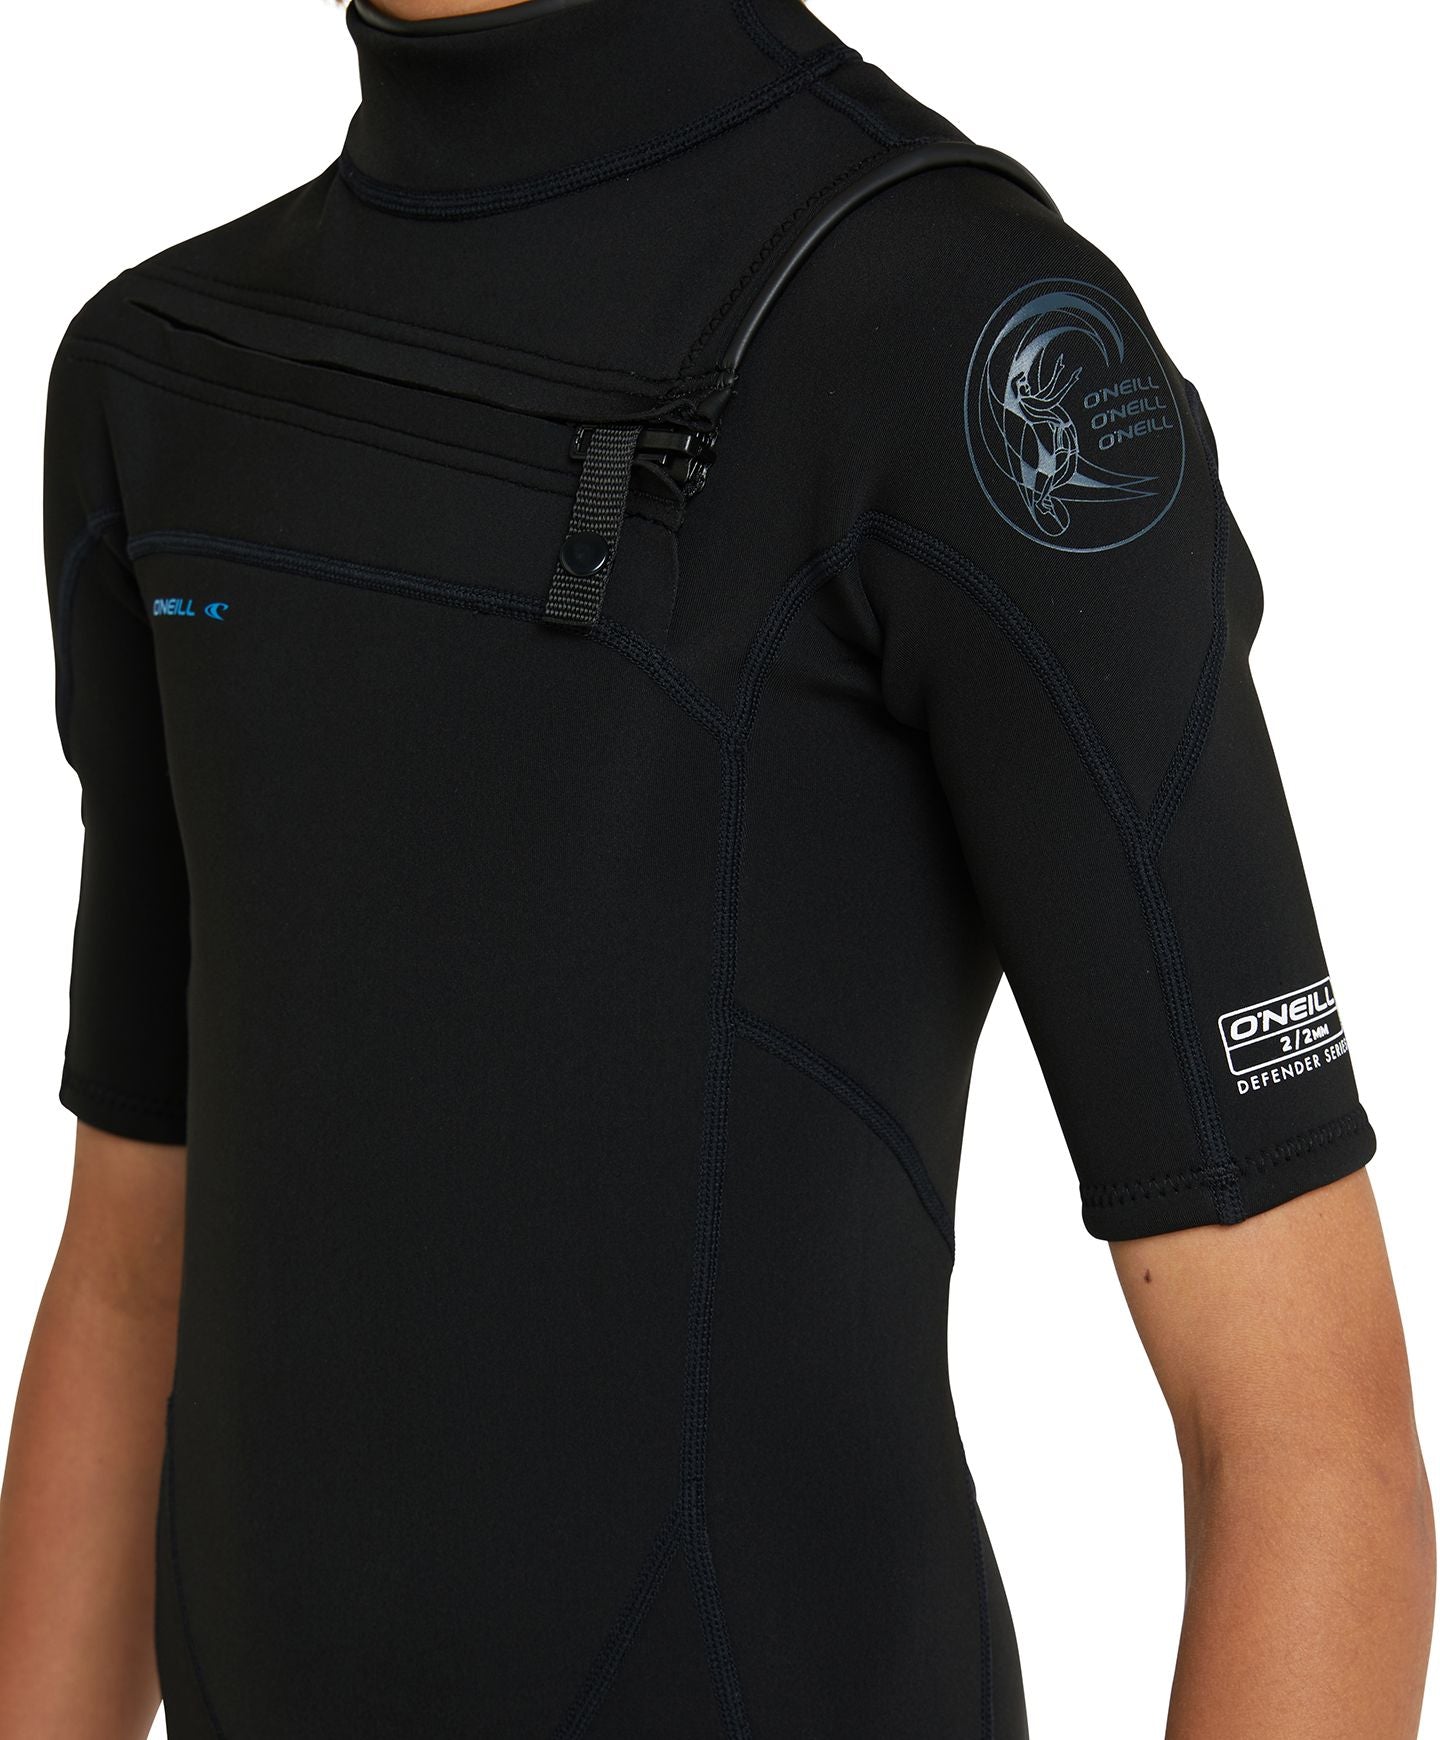 Boy's Defender 2mm Short Sleeve Spring Suit CZ Wetsuit - Black